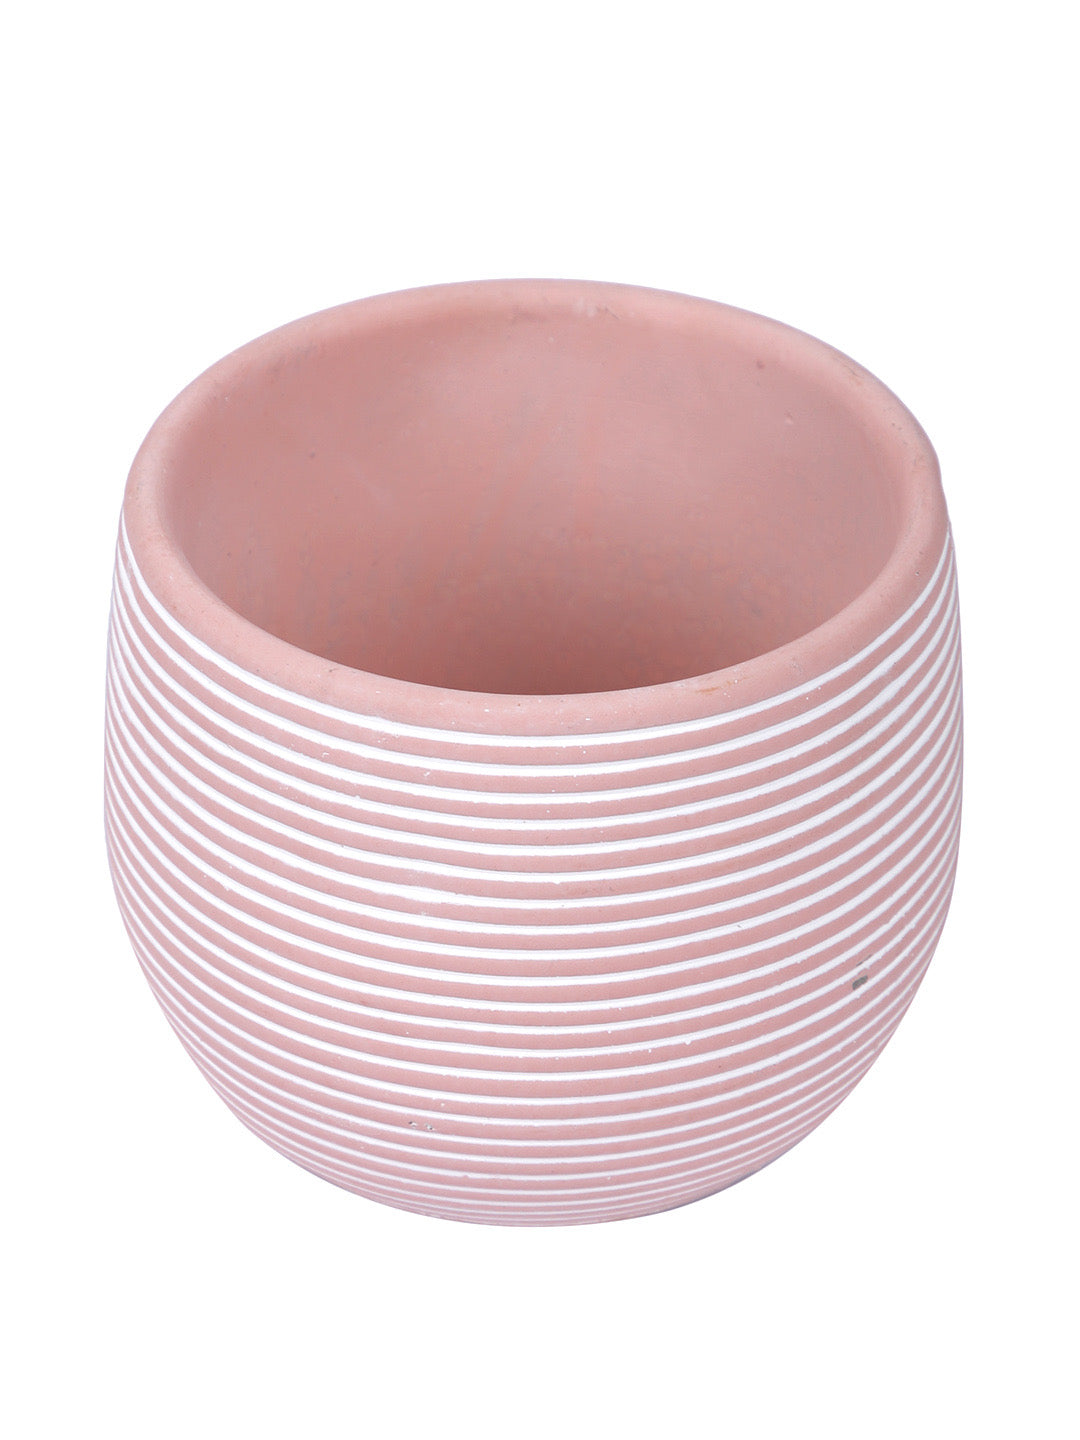 Spiral Texture Ceramic Pink Planter - Default Title (CHC22337PI)